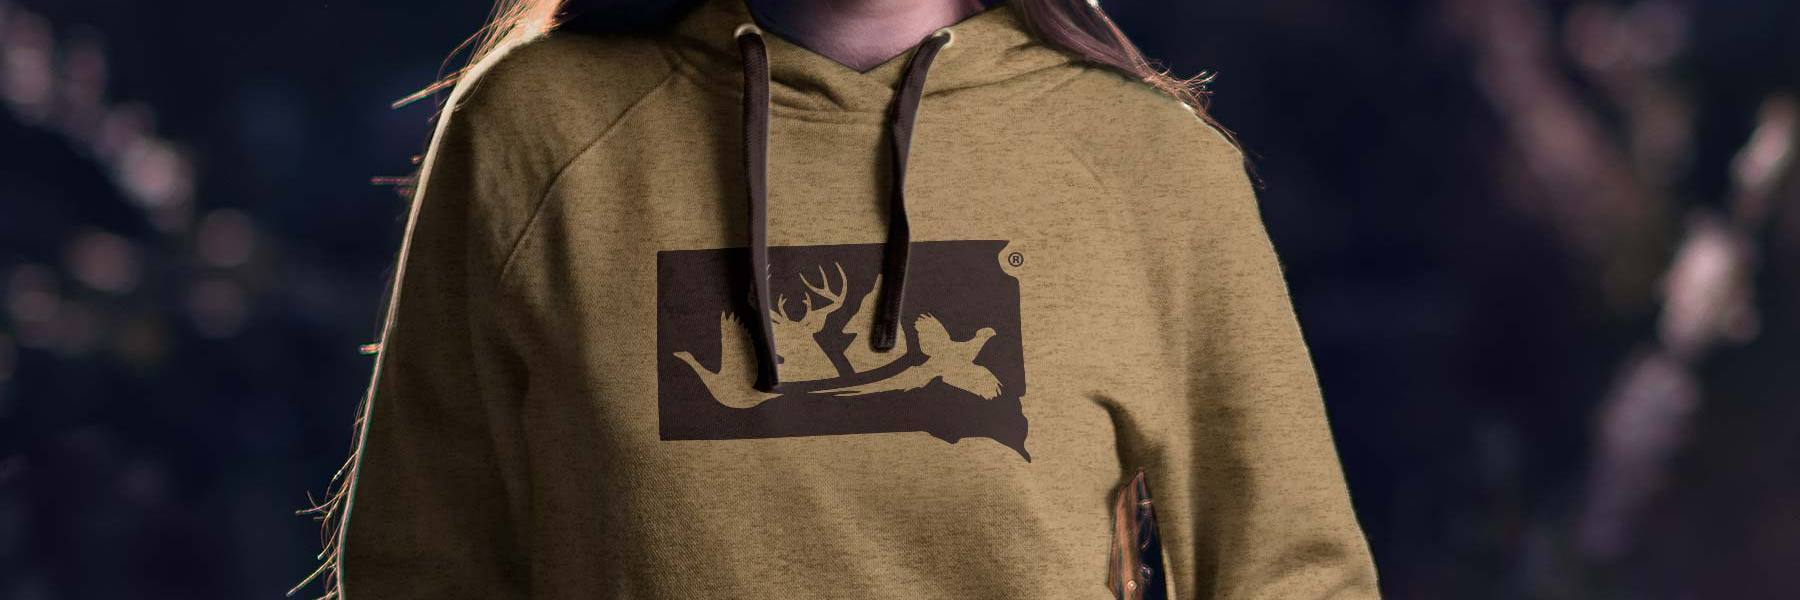 South Dakota Hunting logo on sweater